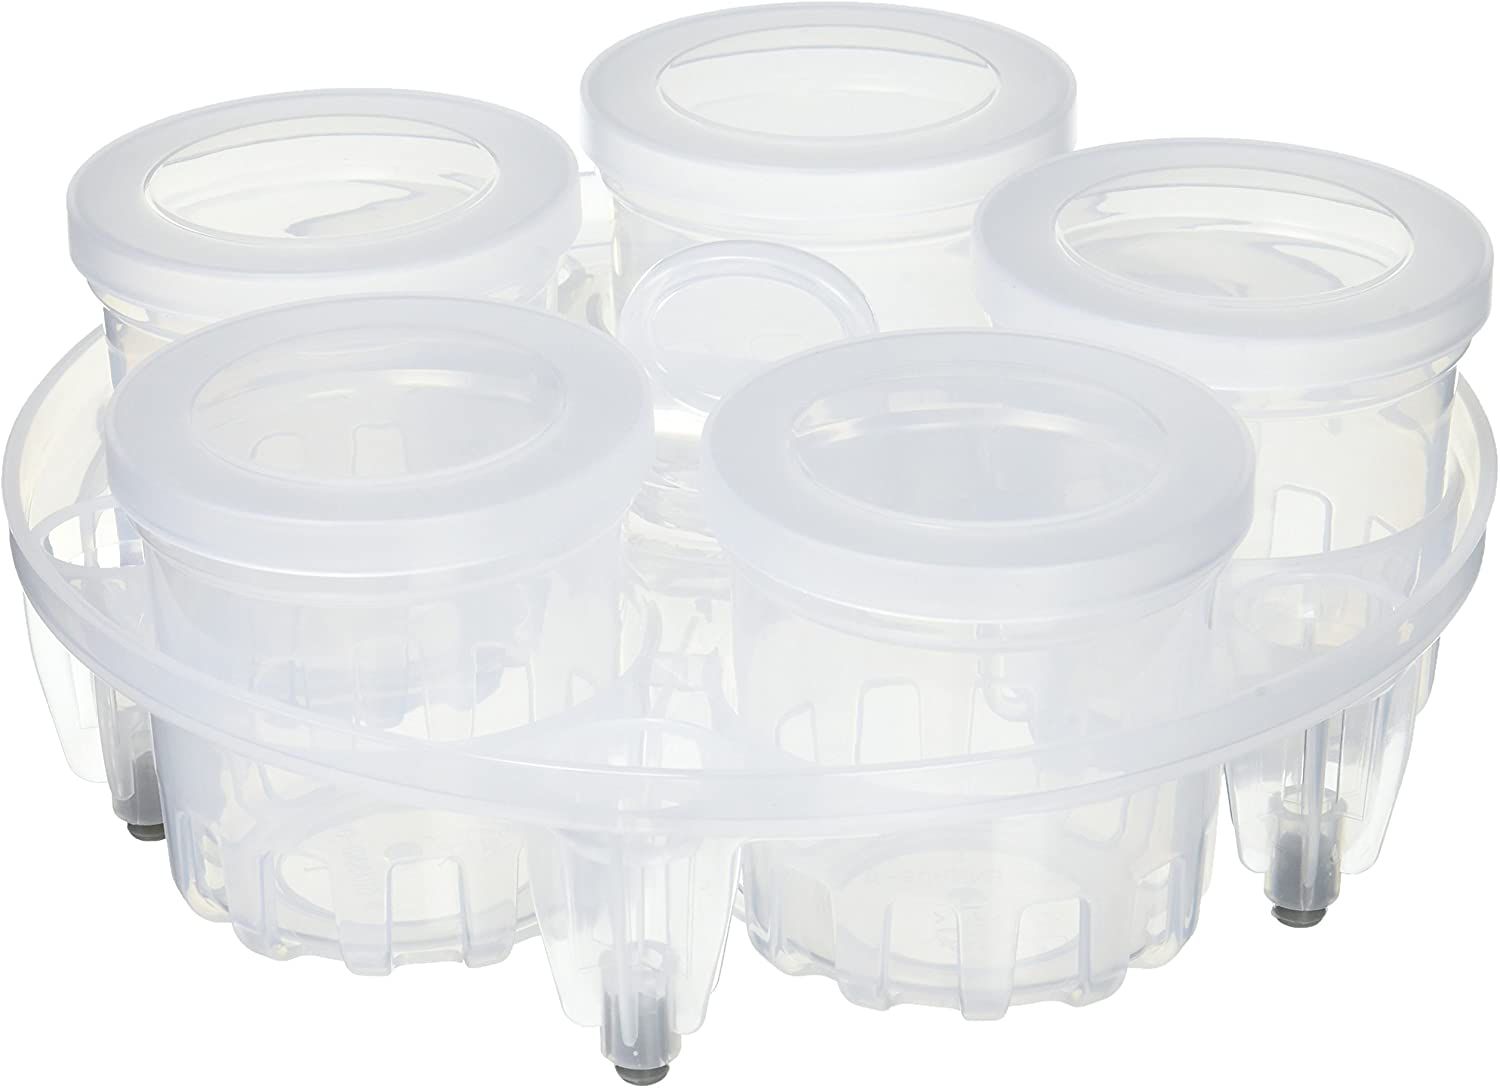 Instant Pot Yogurt Cups and Pressure Sterilization Rack